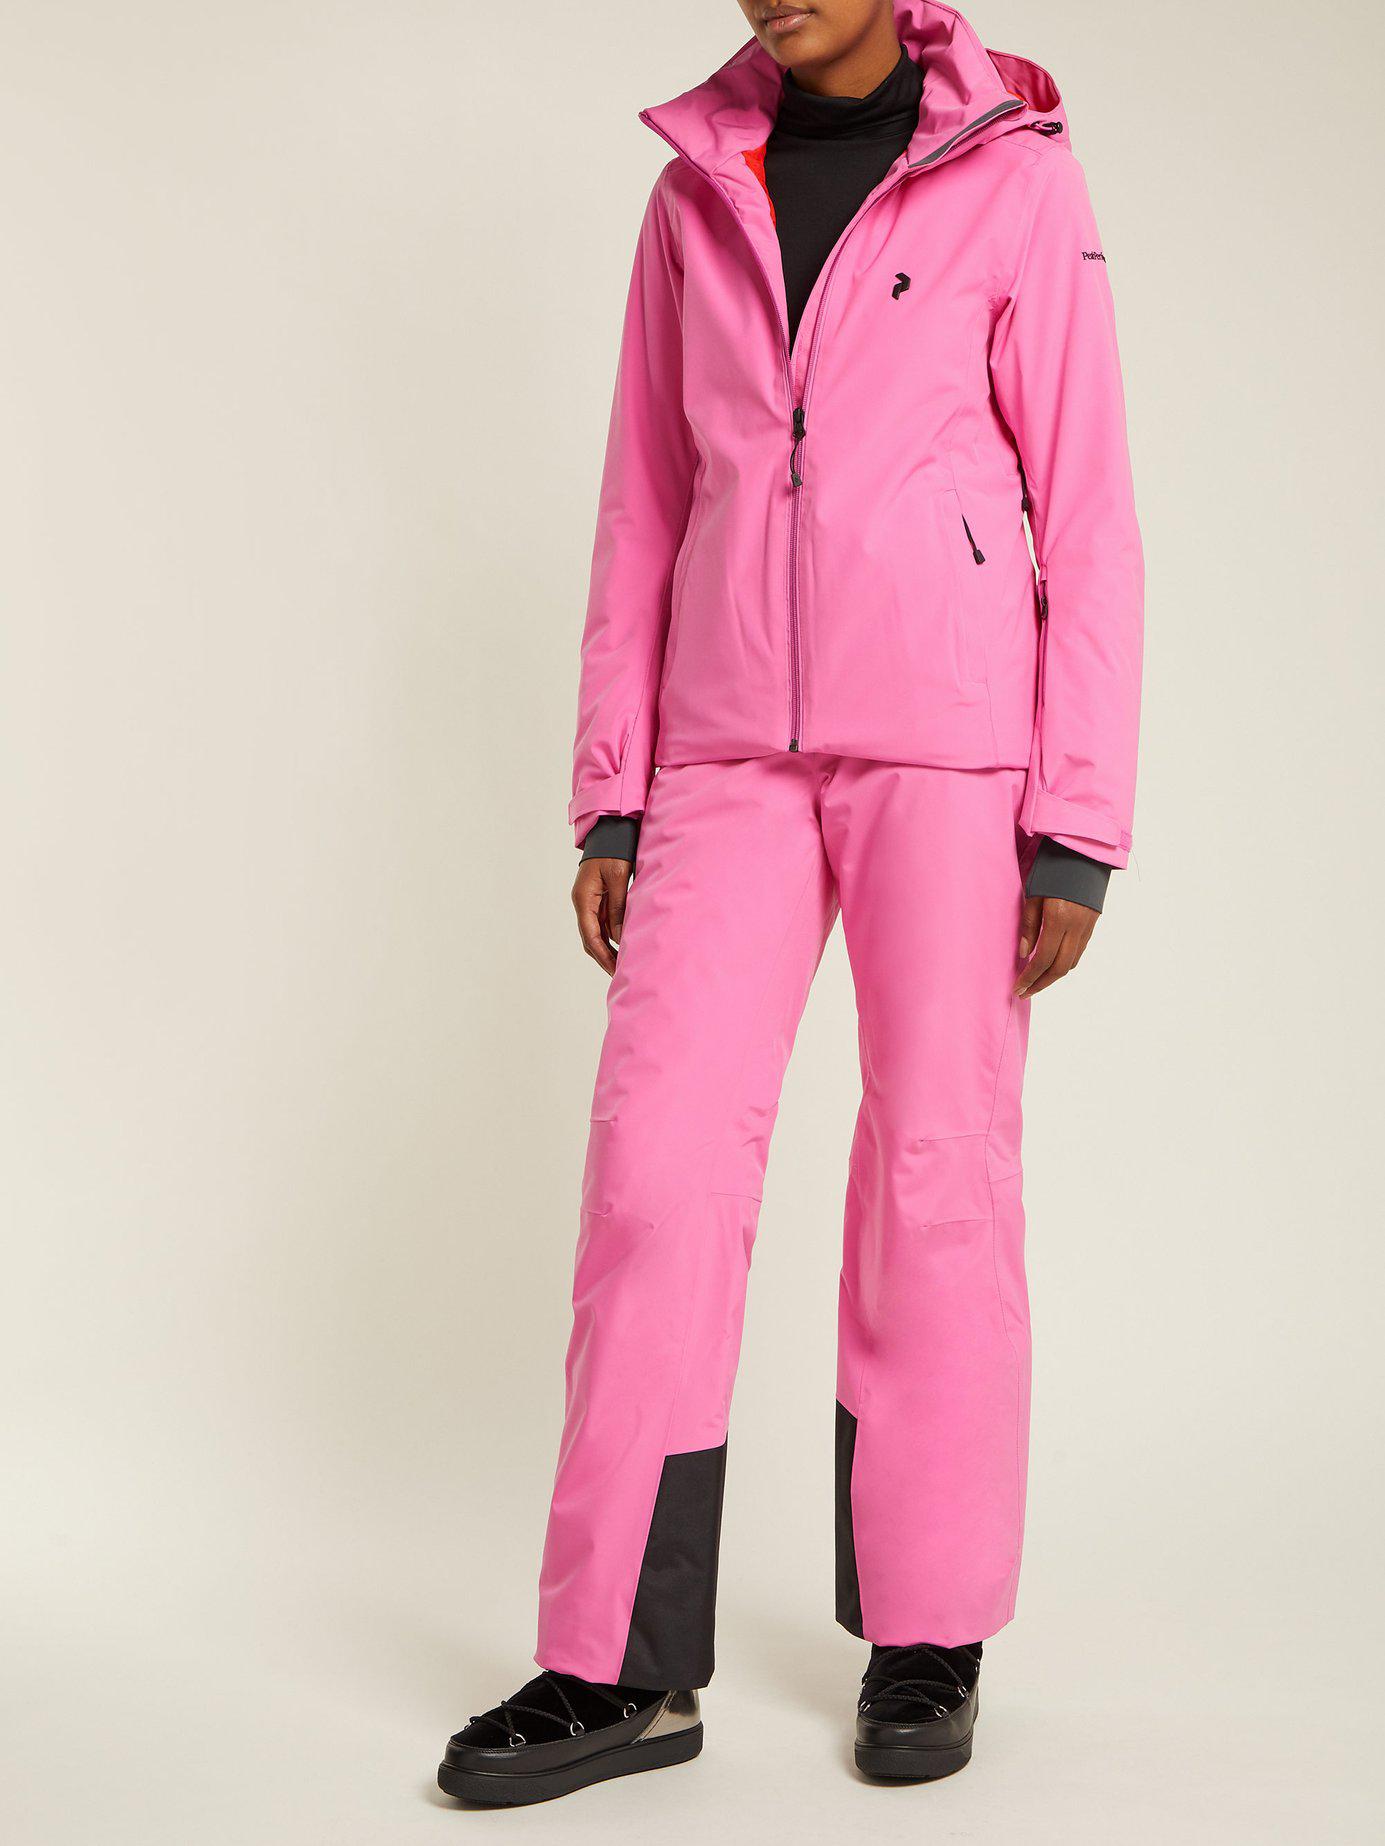 Peak Performance Anima Hooded Ski Jacket in Pink - Lyst